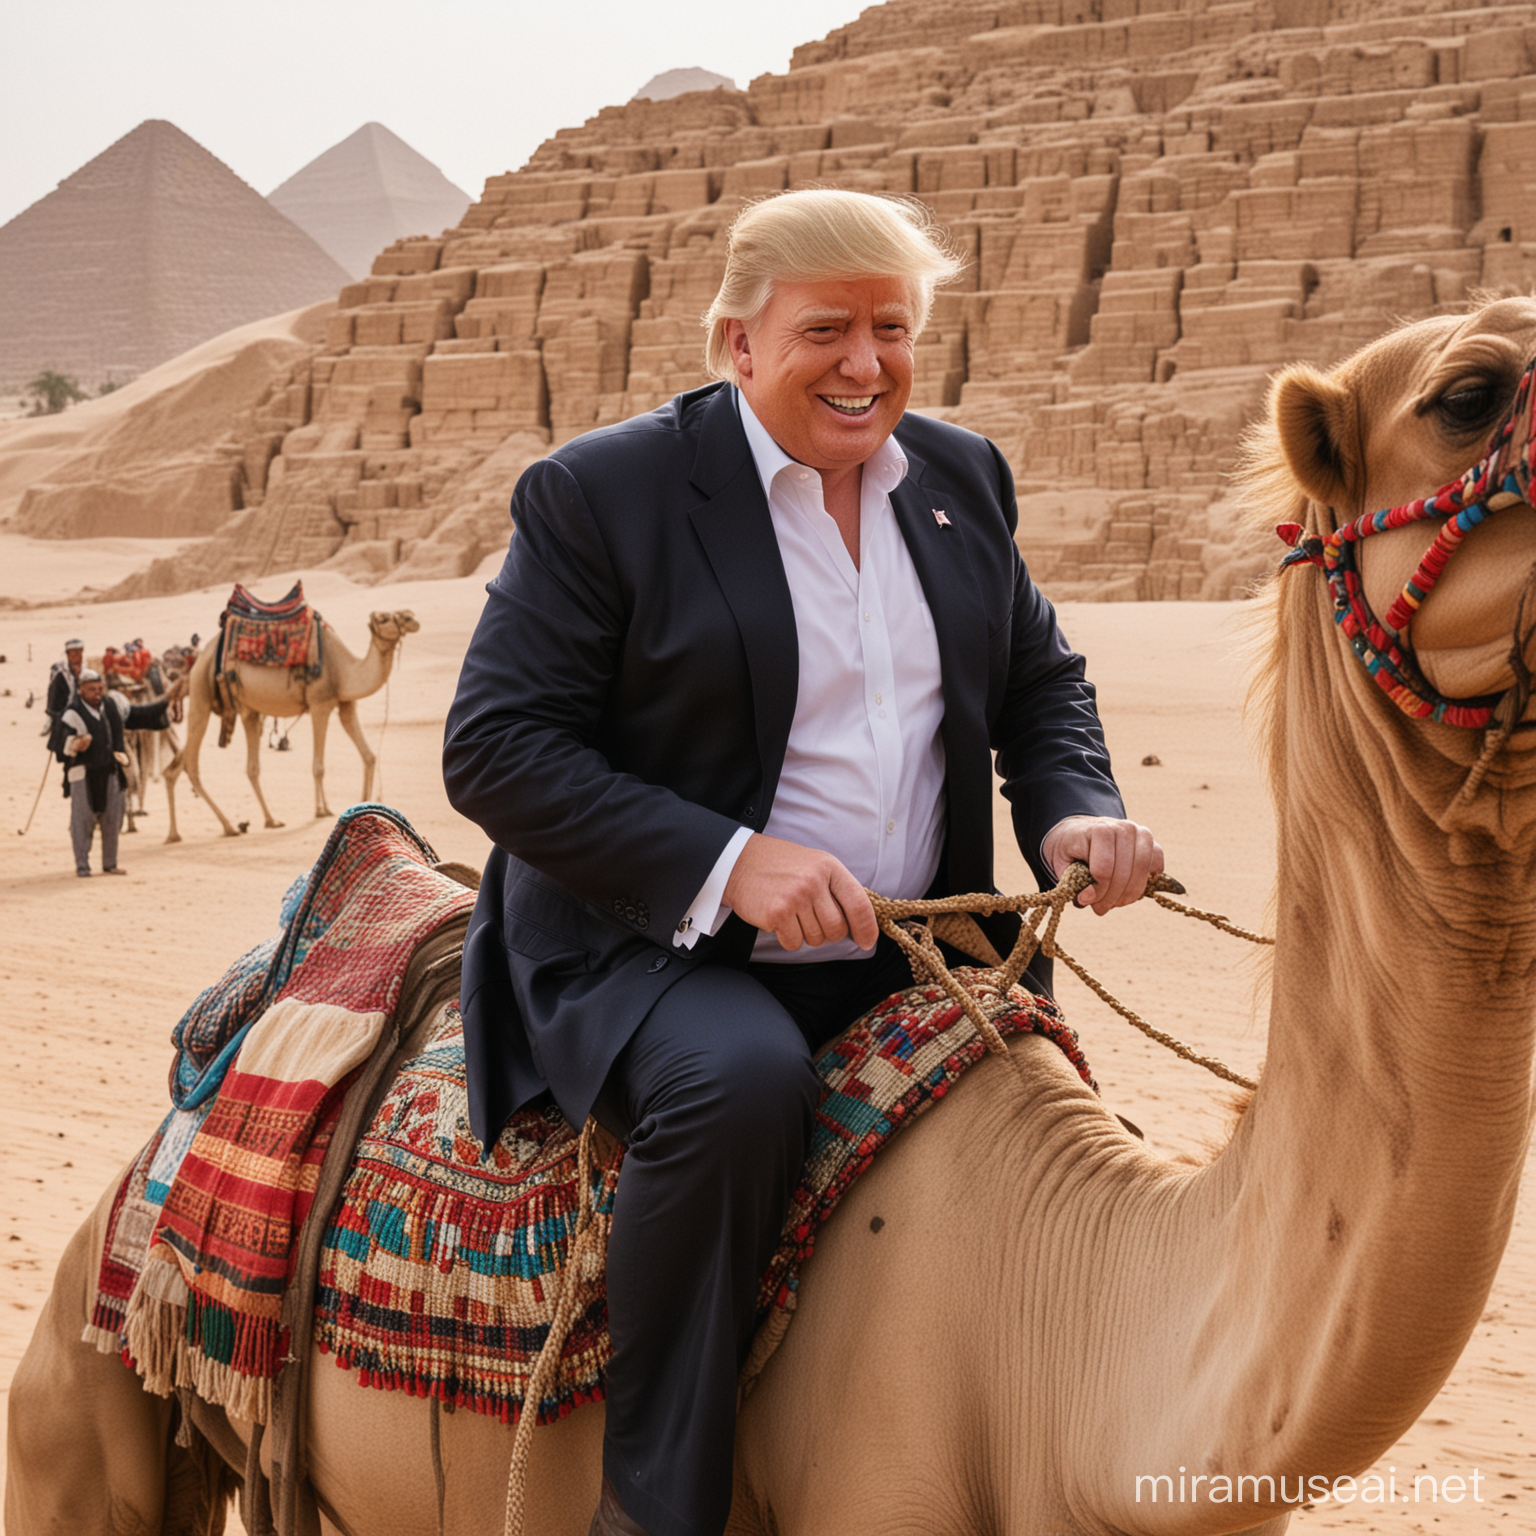 Donald Trump Riding Camel Closeup Portrait in Egypt